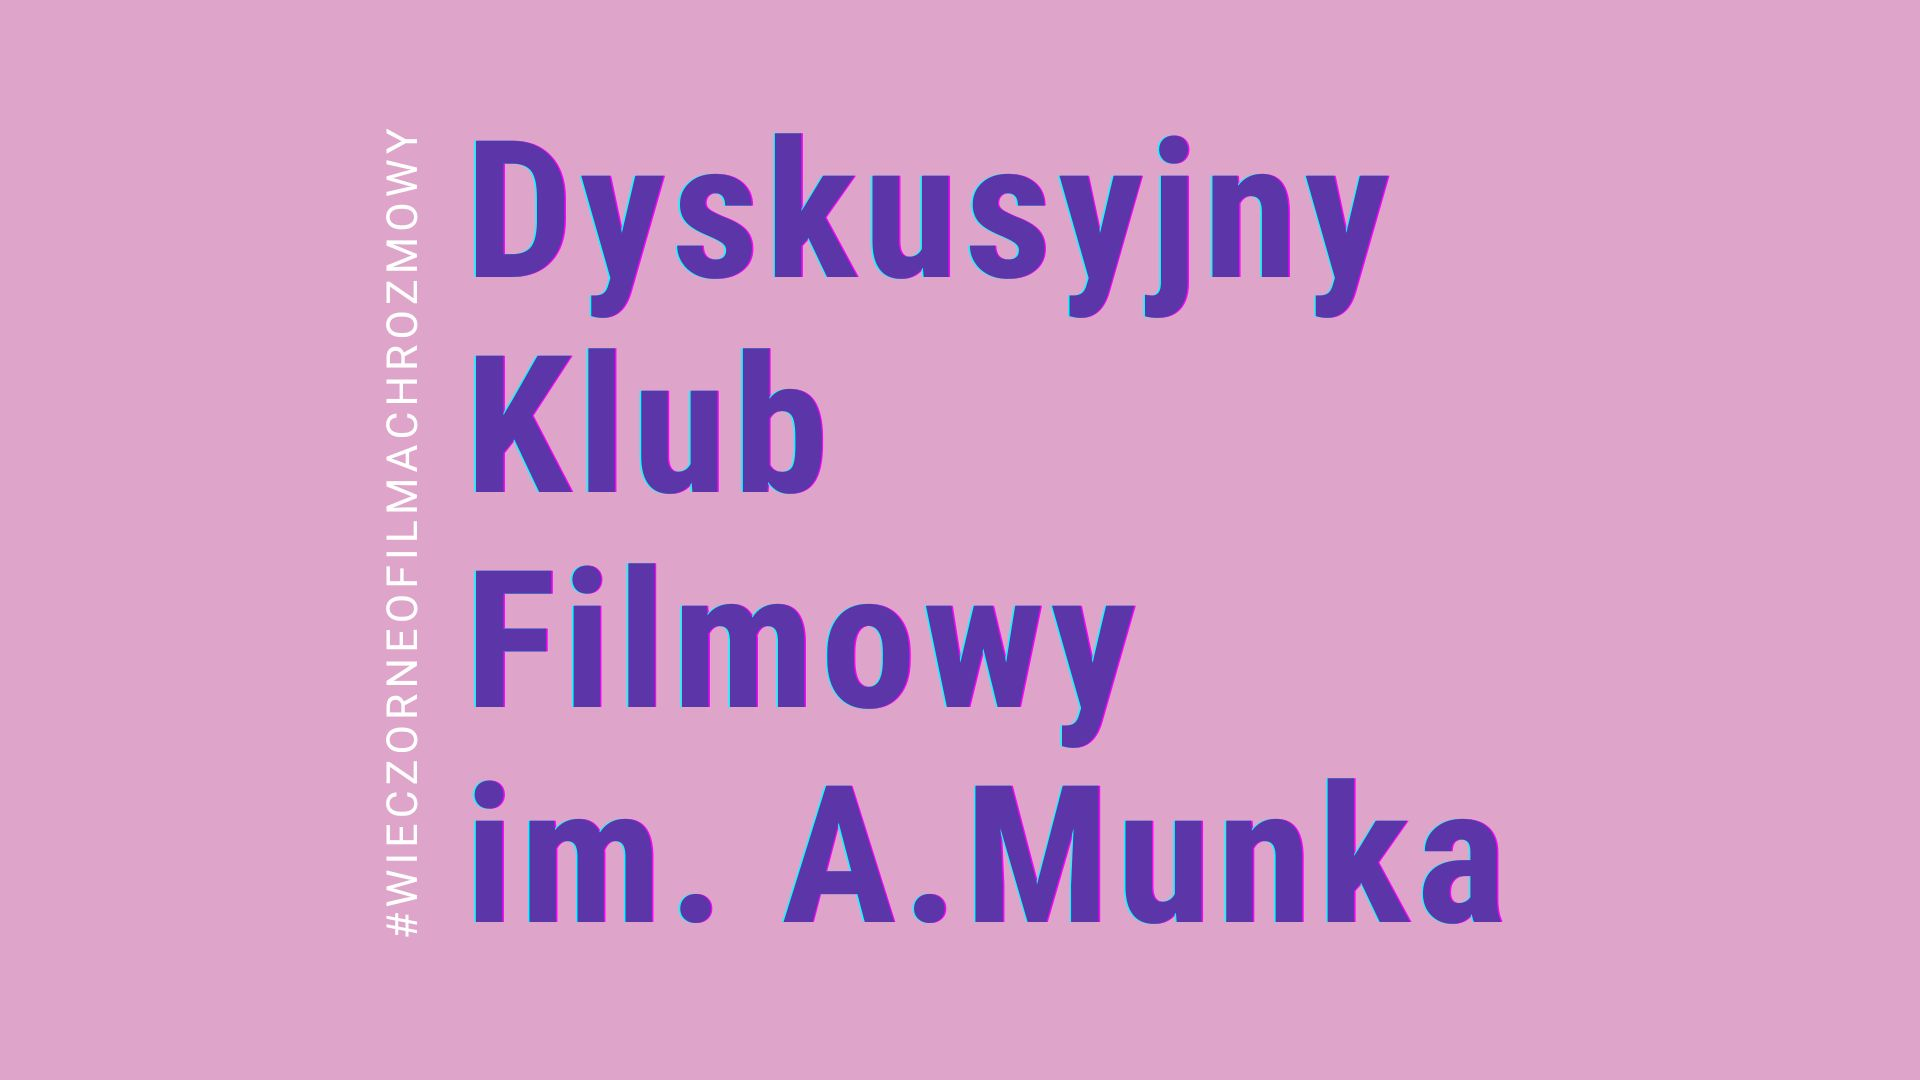 O Dyskusyjnym Klubie Filmowym im. A. Munka